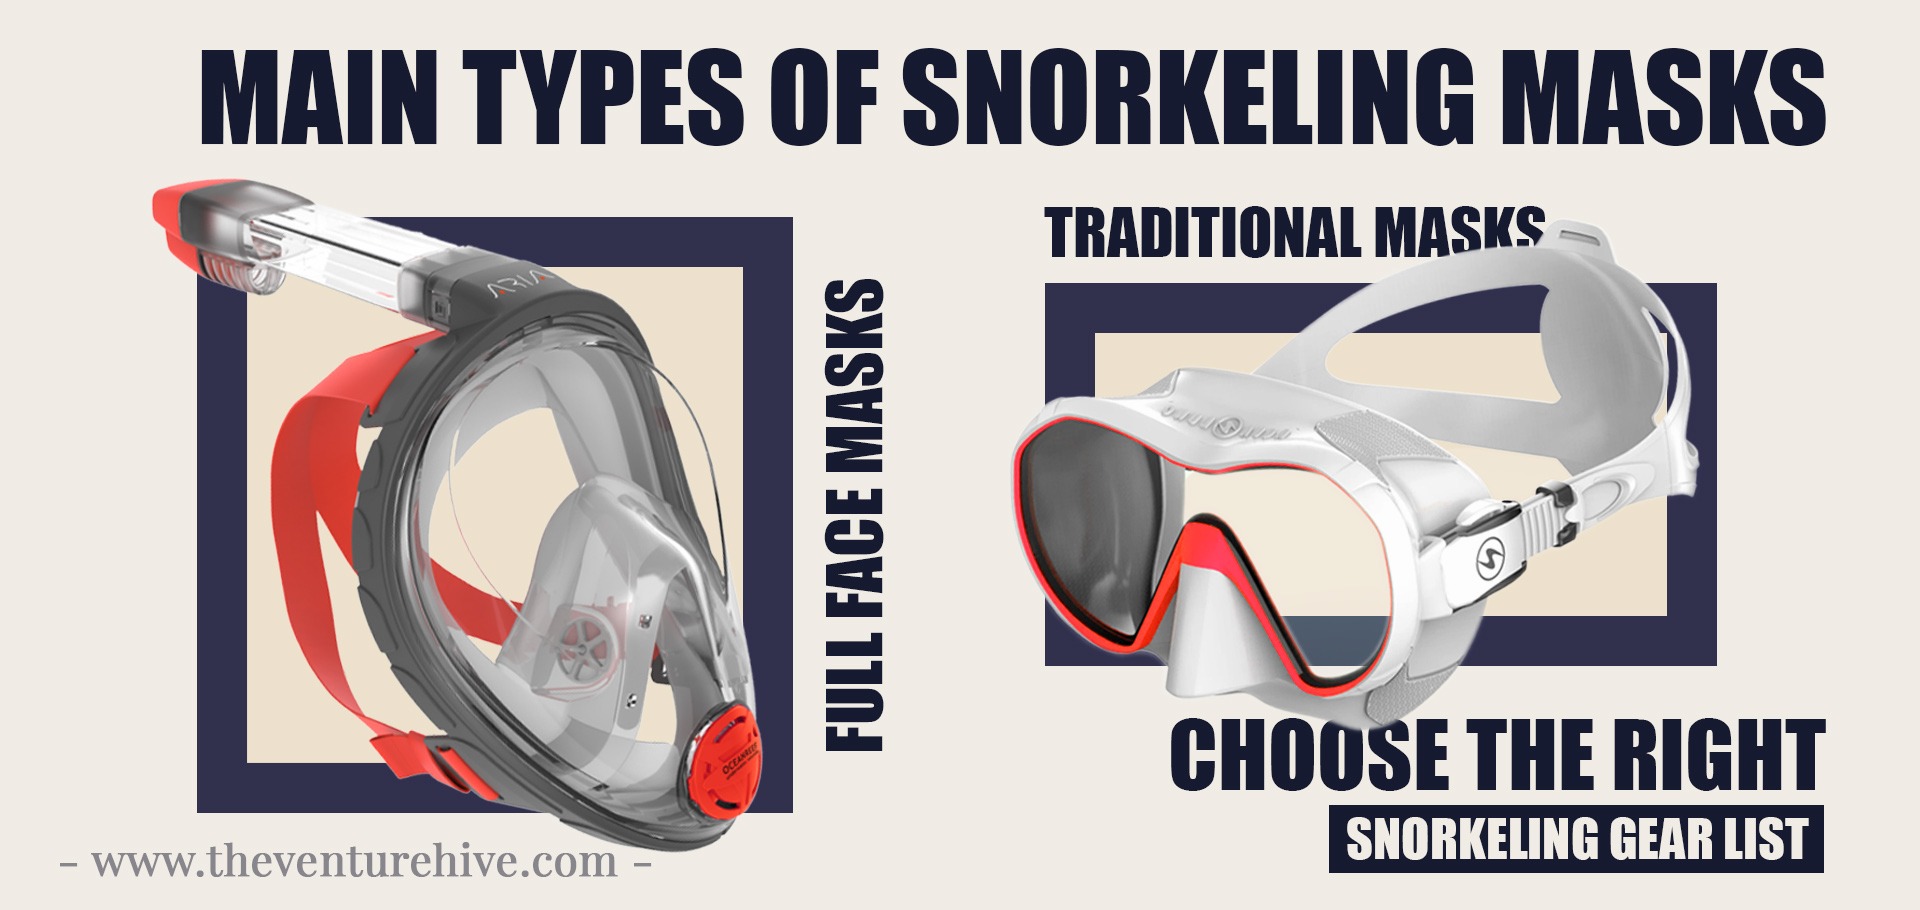 Main types of snorkeling masks